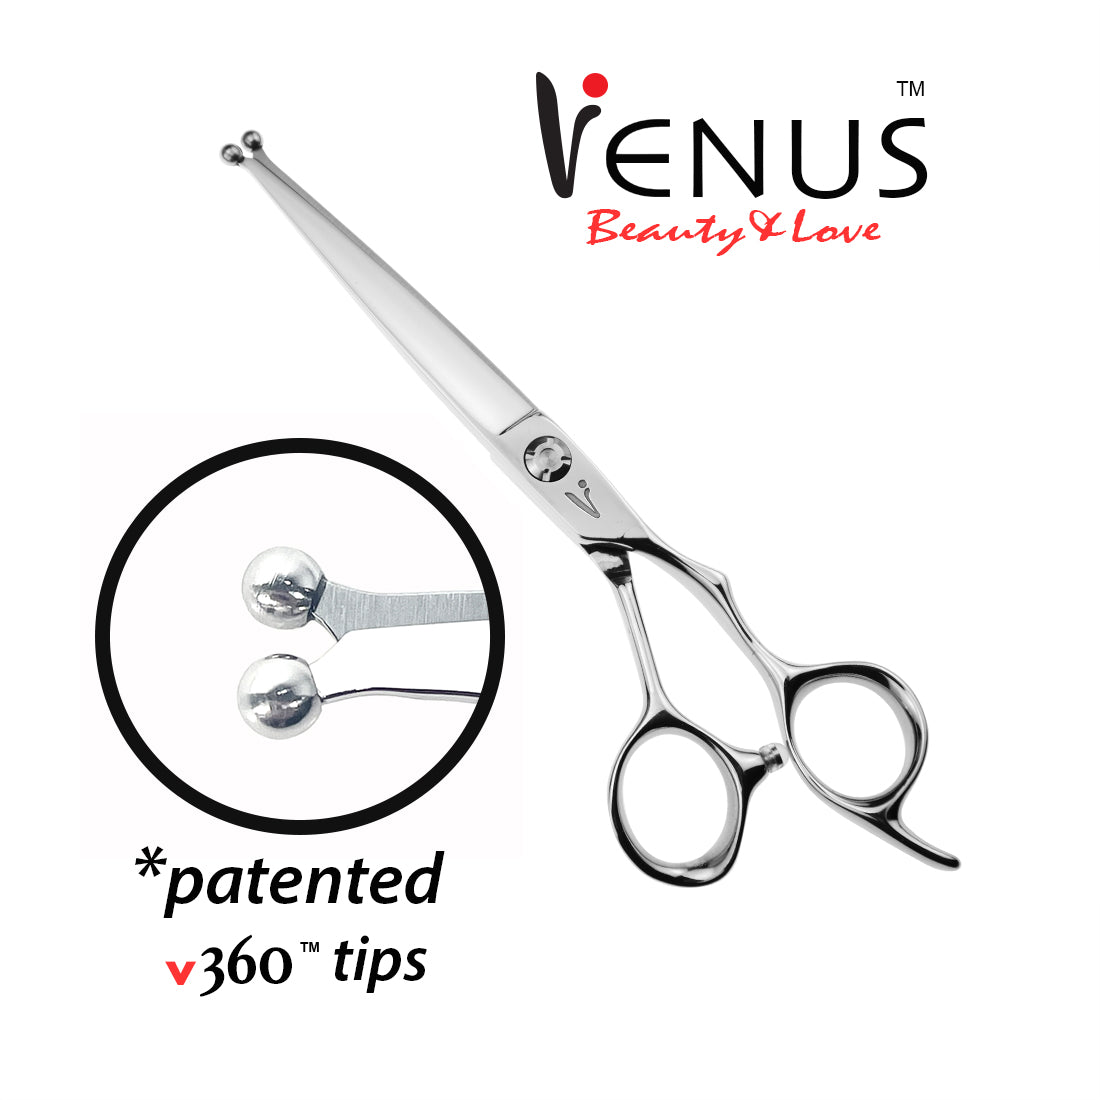 Venus-v360™ Handcrafted Precision Shears-Right Hand